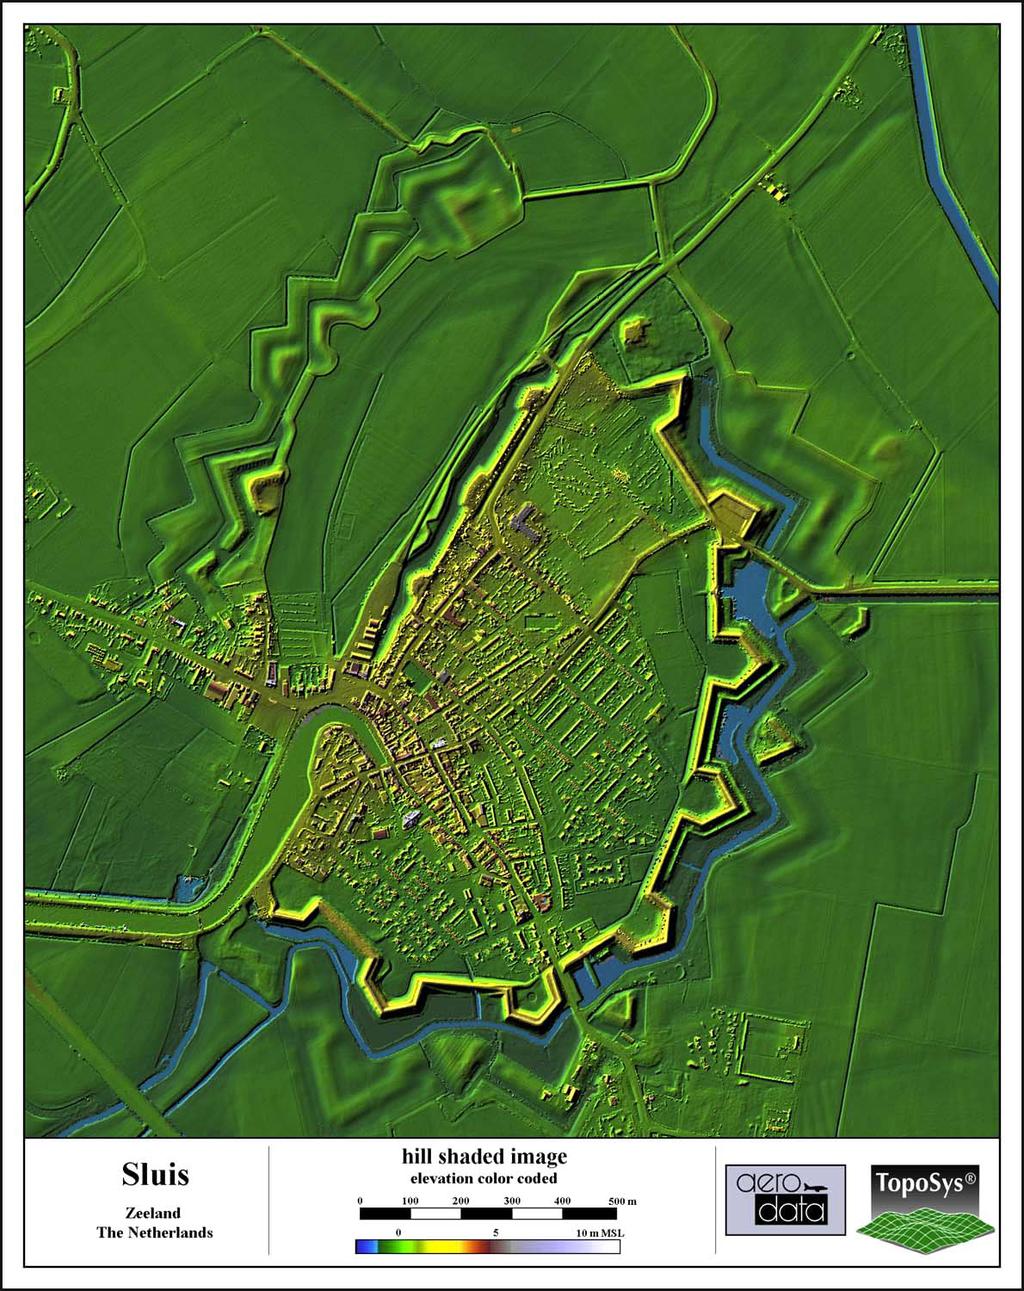 (Uwe Lohr, 1999) The upper plot shows a village in the Netherlands.